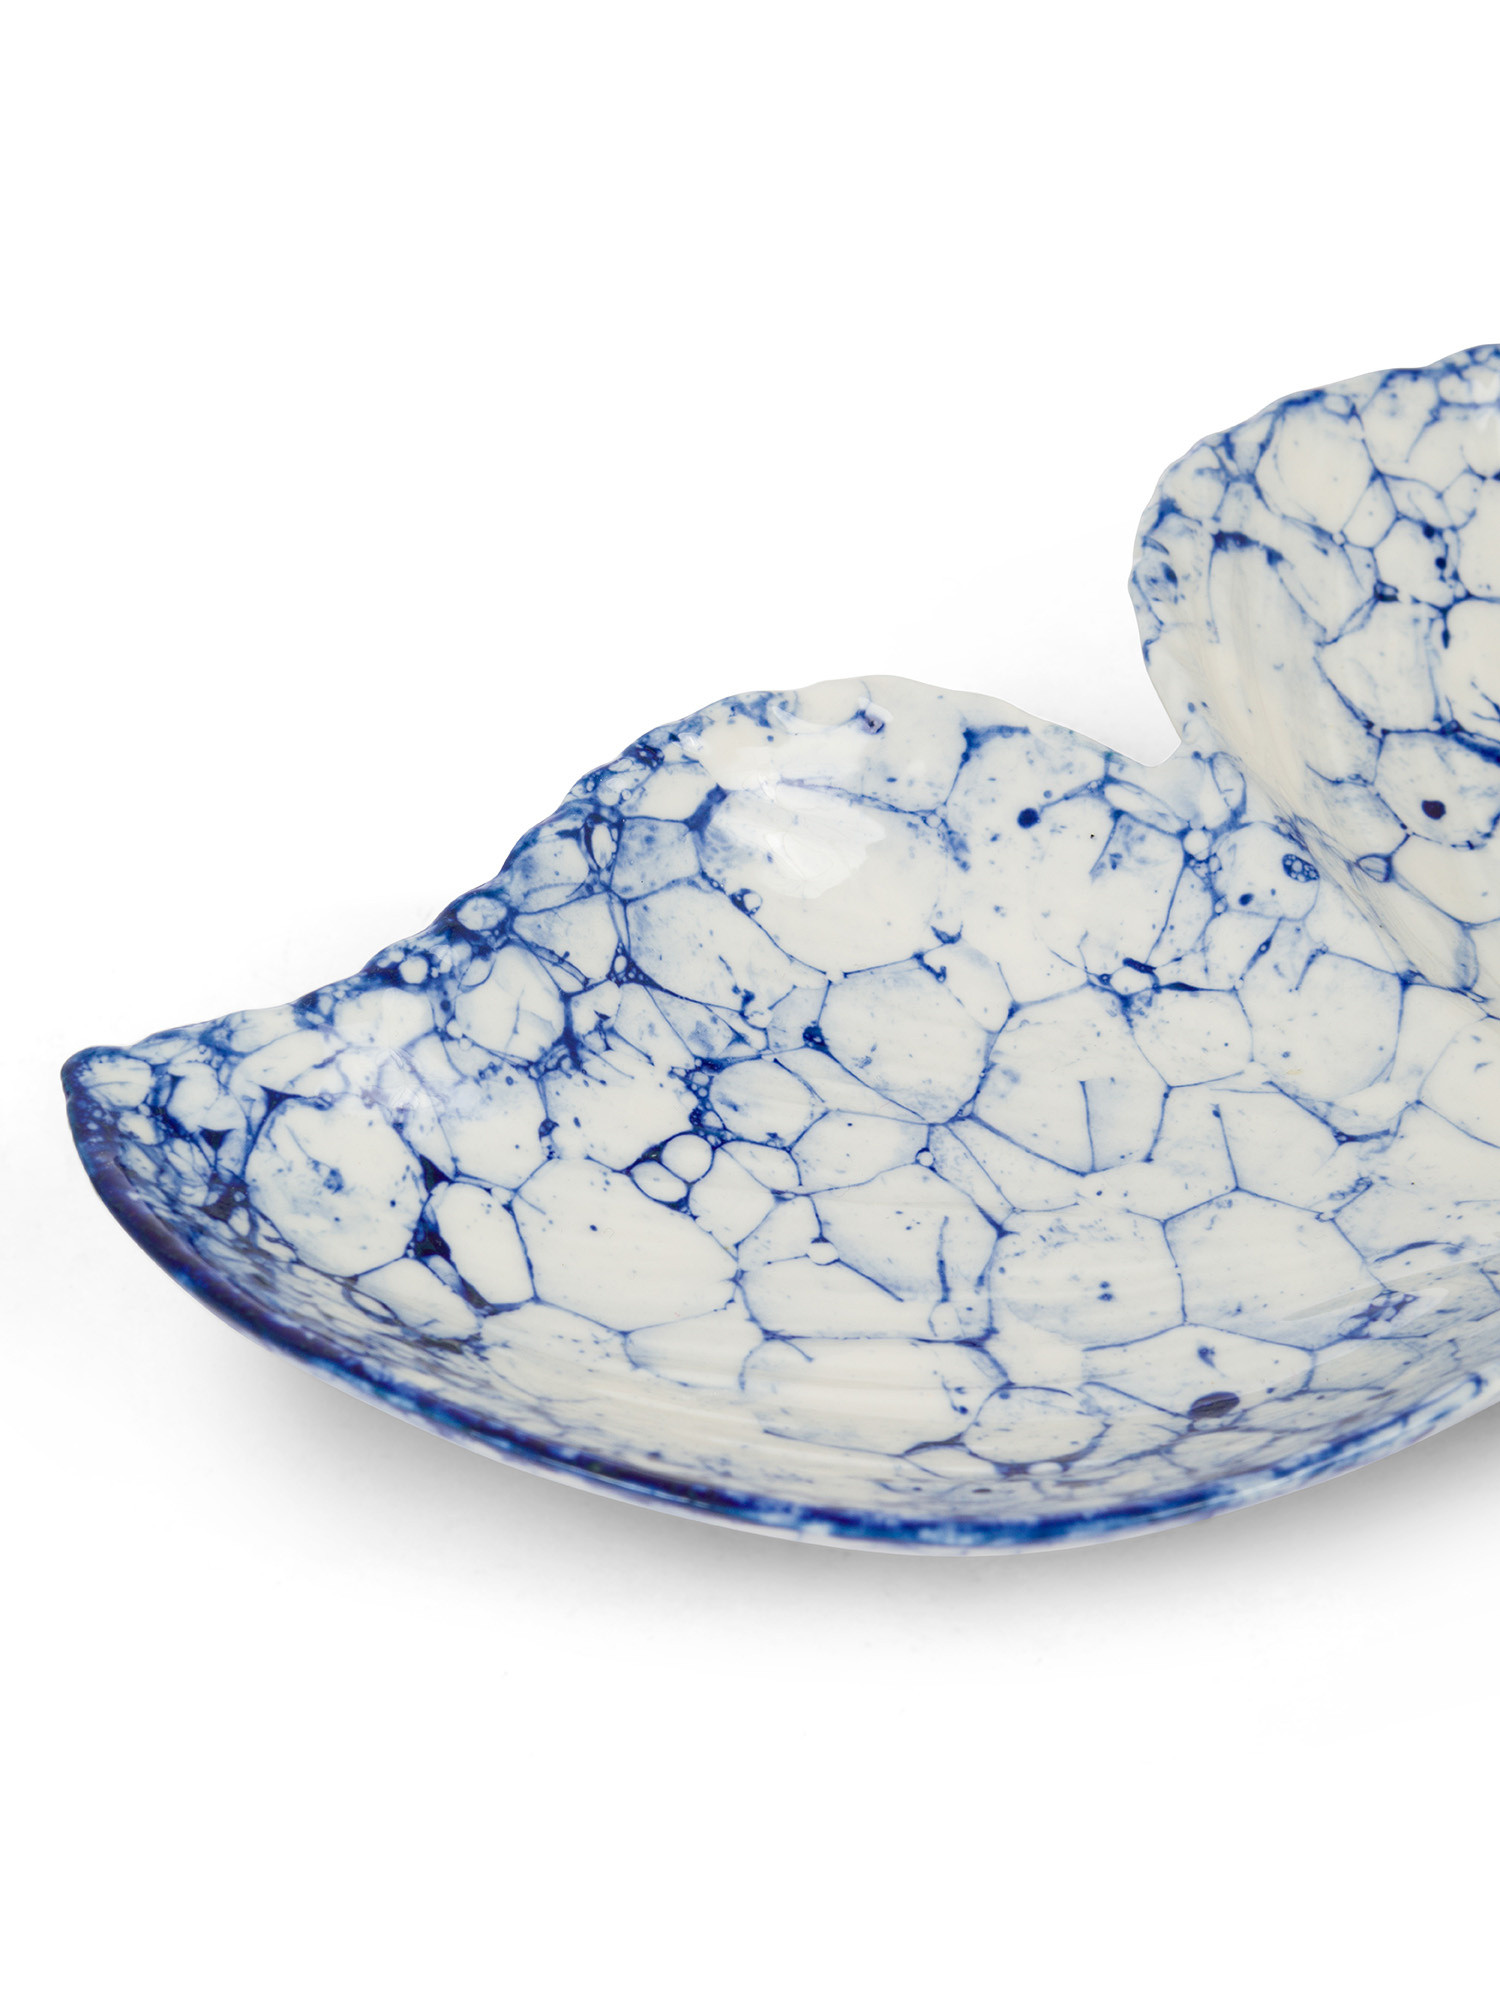 Svuotatasche in ceramica, Bianco/Blu, large image number 1